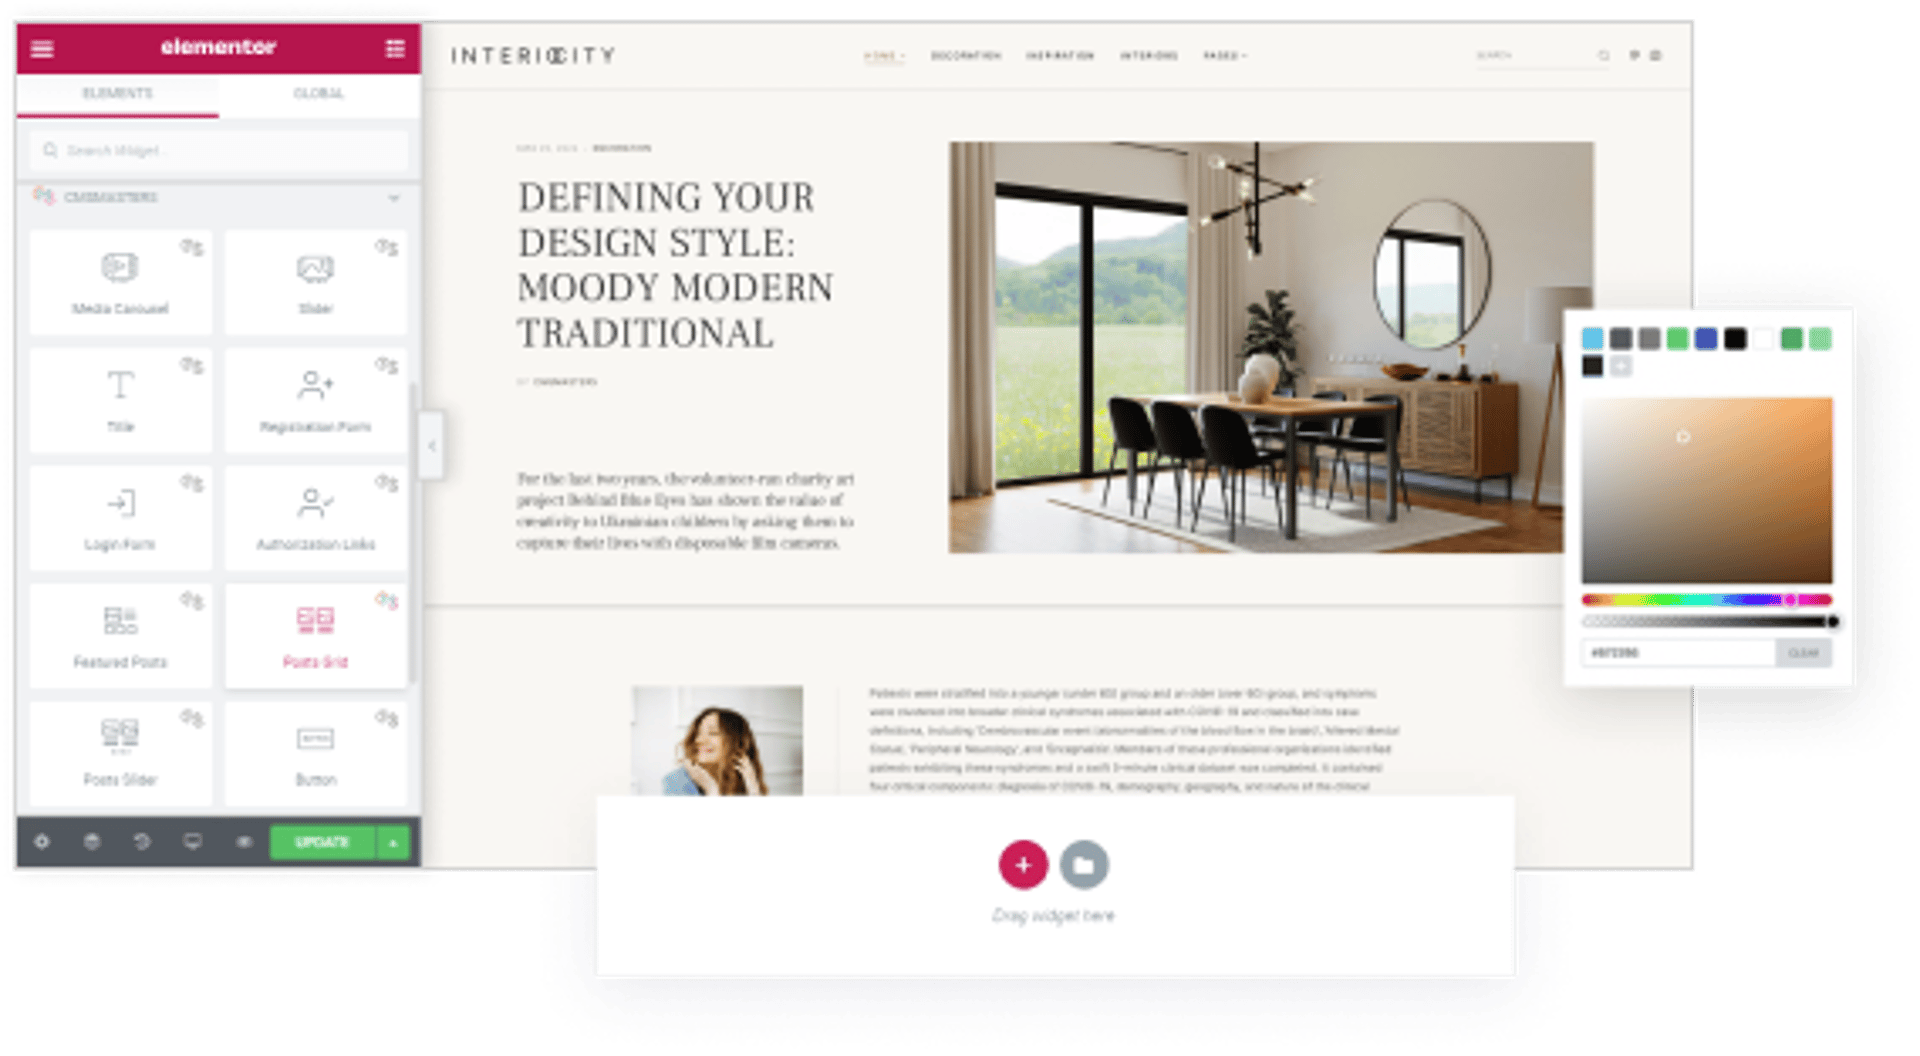 Interiocity - Home Decor Blog and Interior Design Magazine WordPress Theme - Elementor Builder | CMSMasters studio